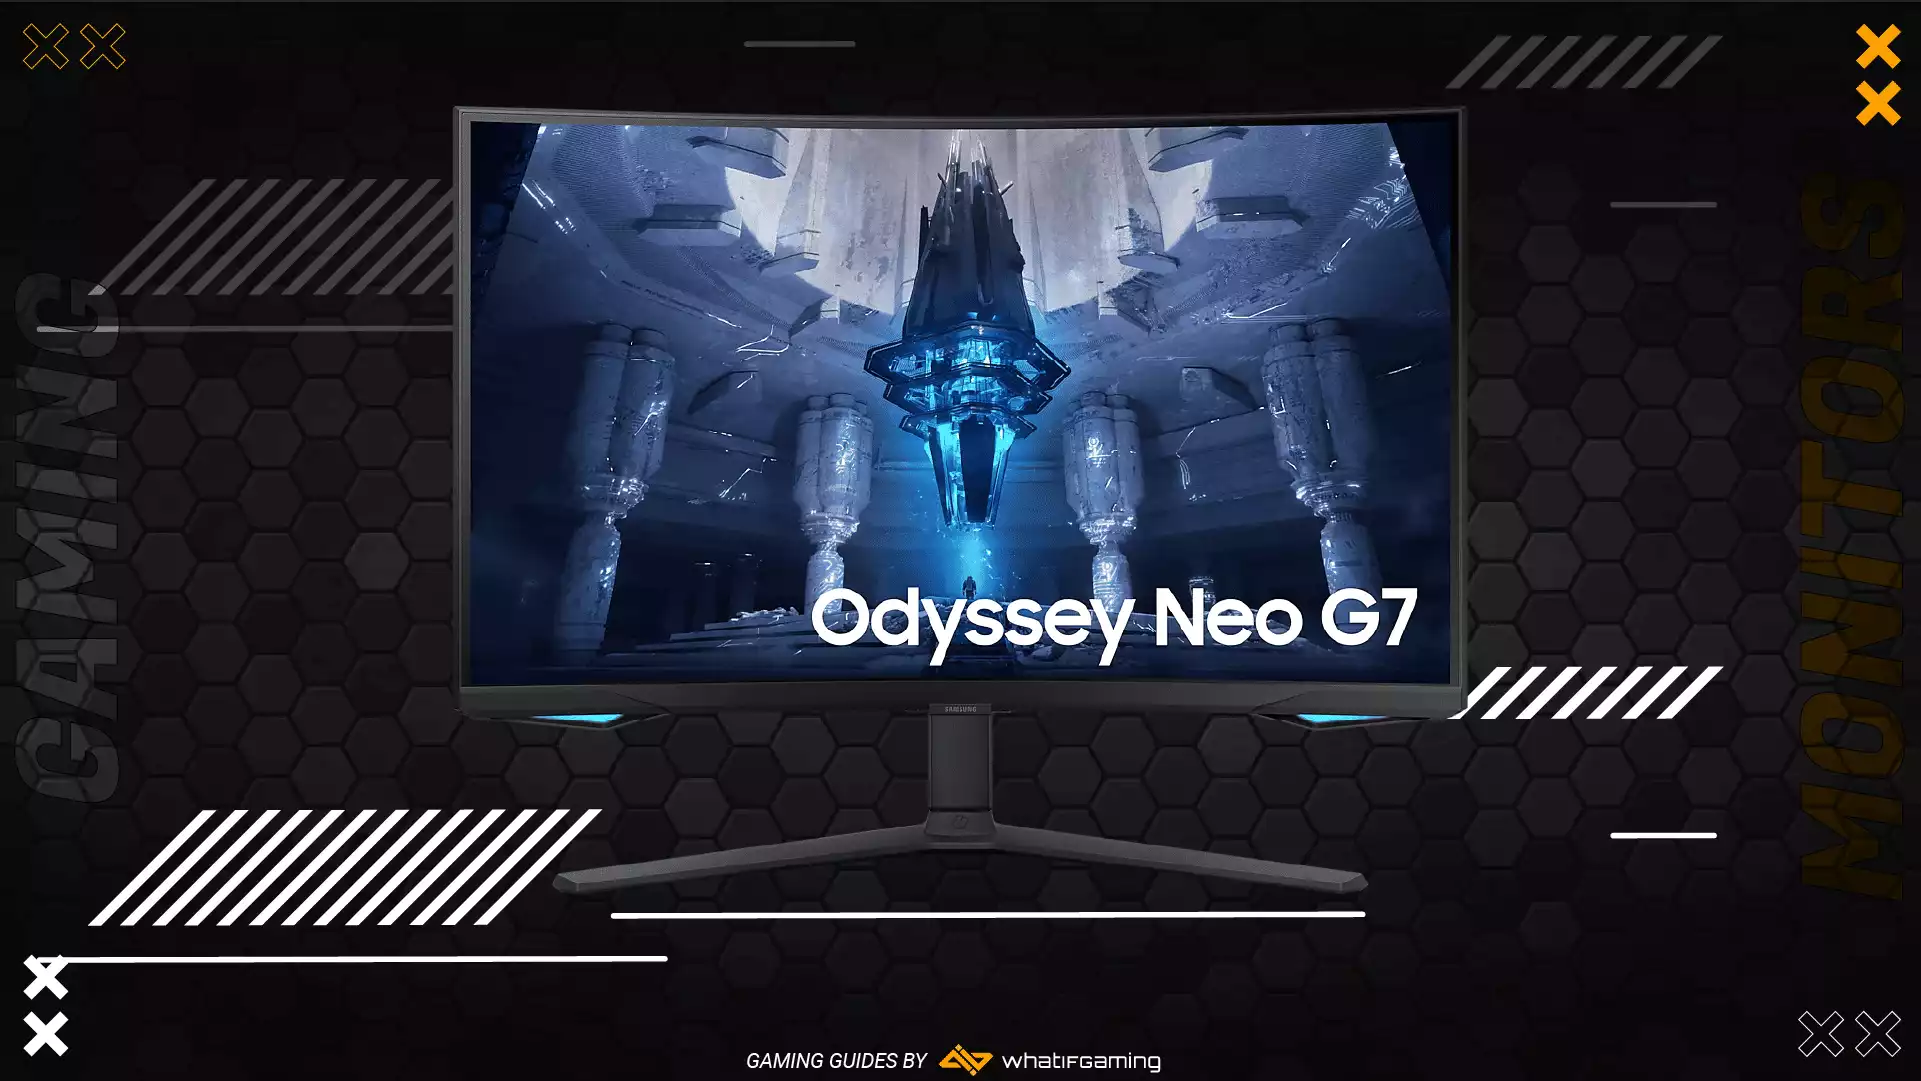 SAMSUNG Odyssey Neo G7